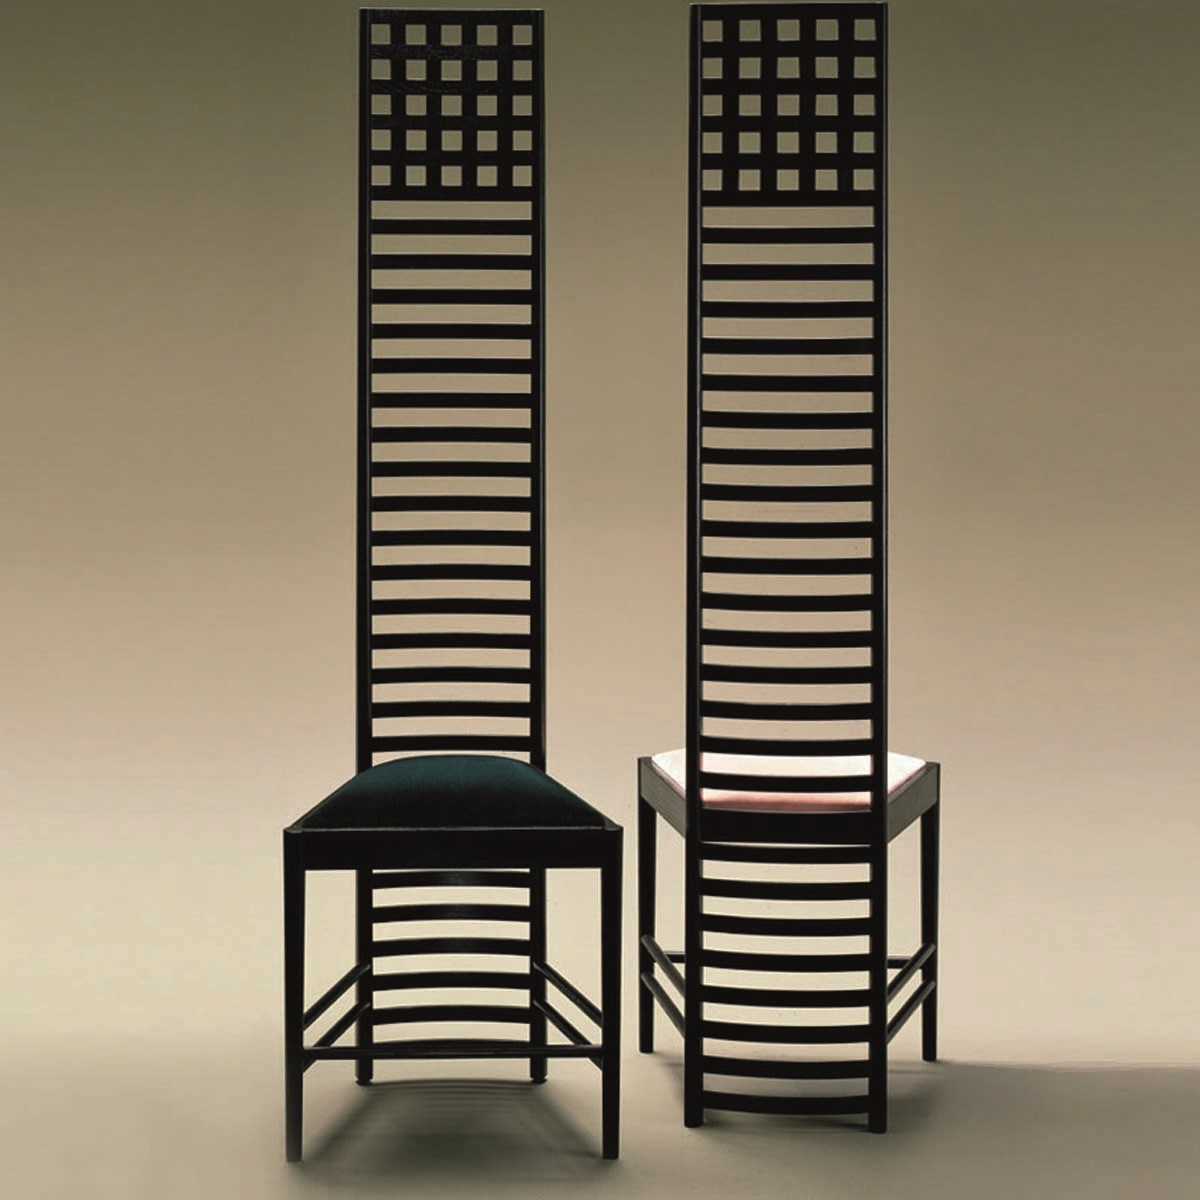 Cassina Mackintosh Hill House Chairs Instu Mix